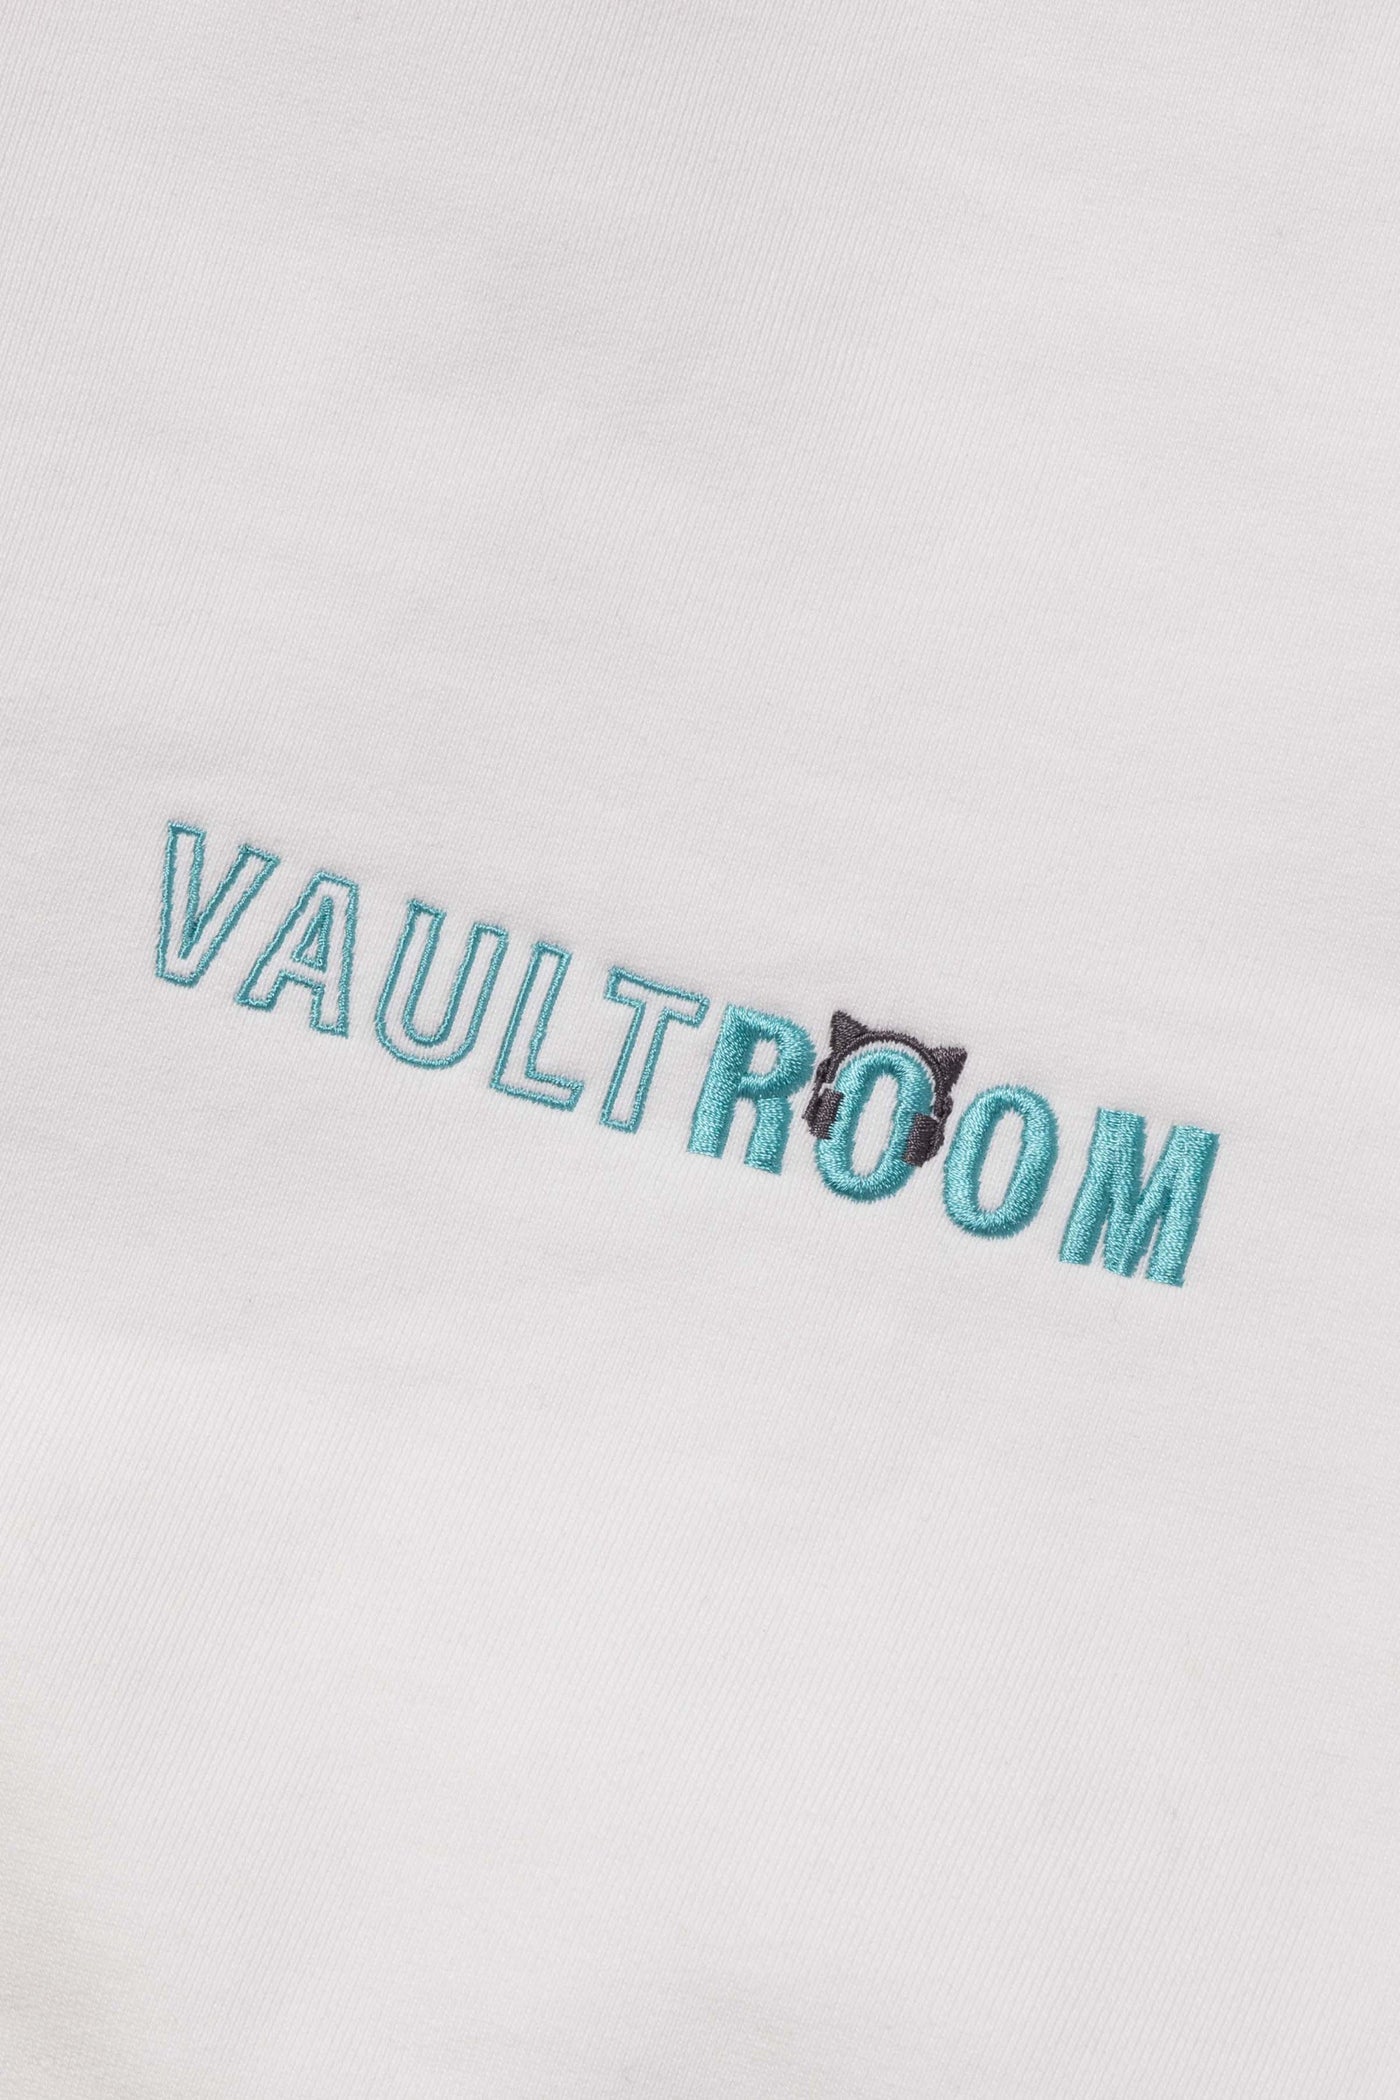 vaultroom × 猫麦とろろ VR × TORORO TEE / BLK-